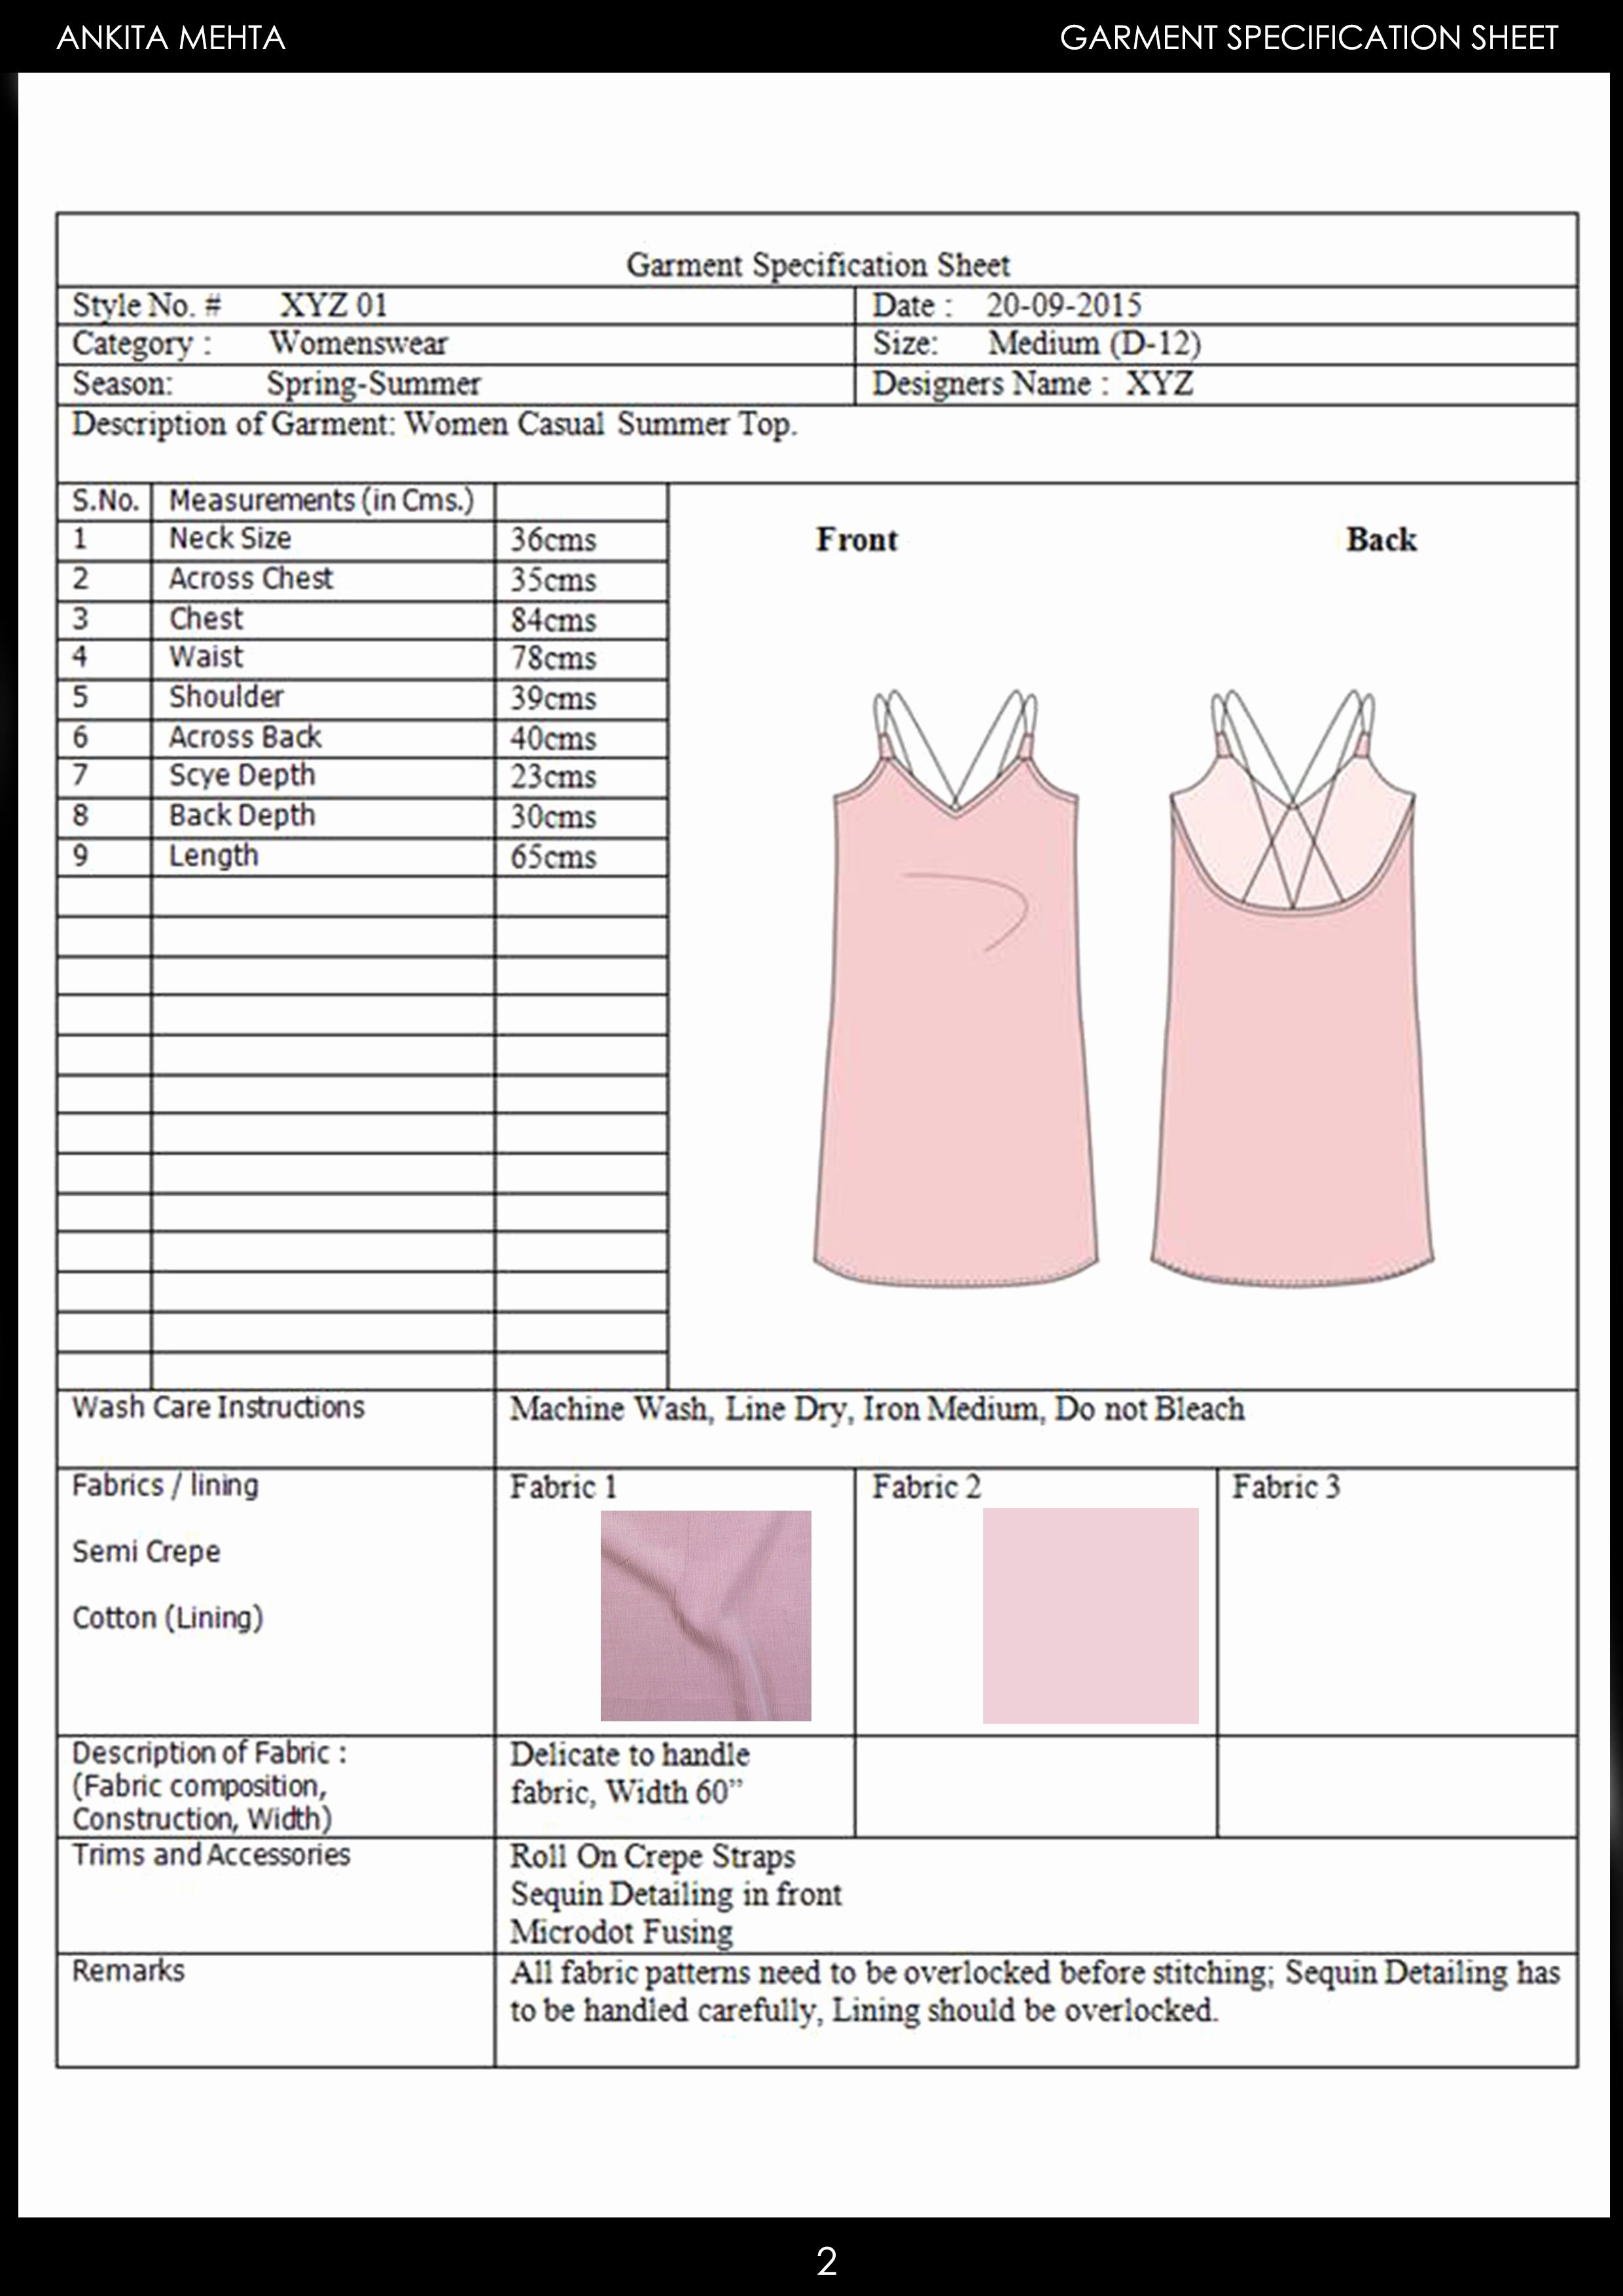 Construction Spec Sheet Template Best Of Womenswear Casual Summer top Garment Specification Sheet